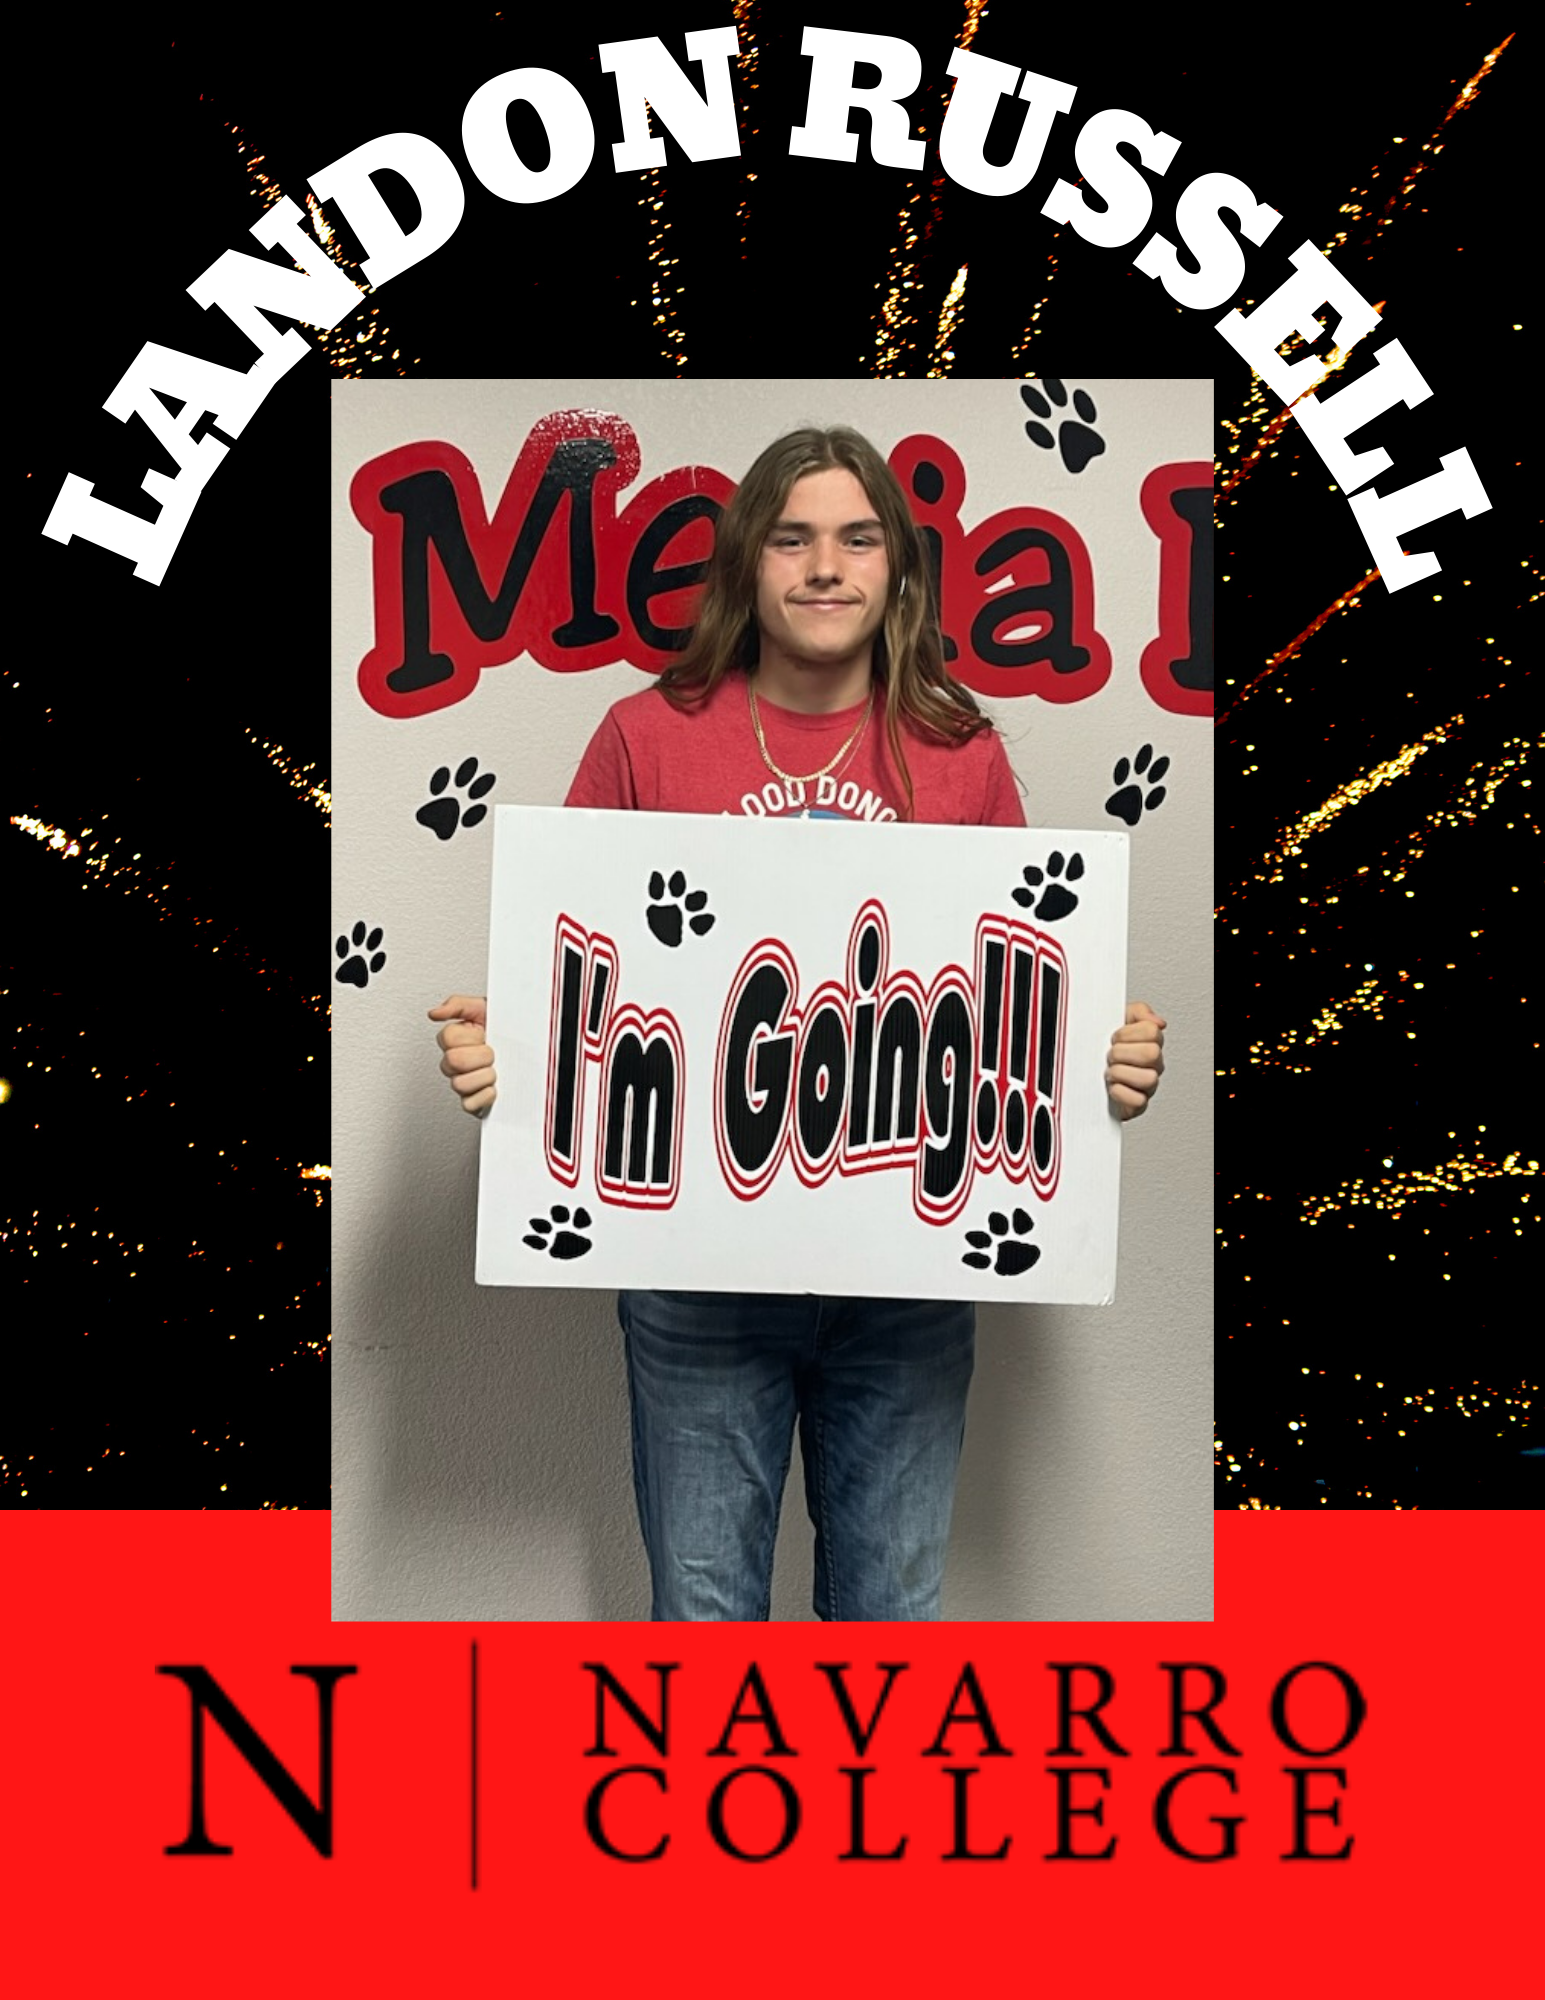 Landon Russell - I'm Going! - Navarro College